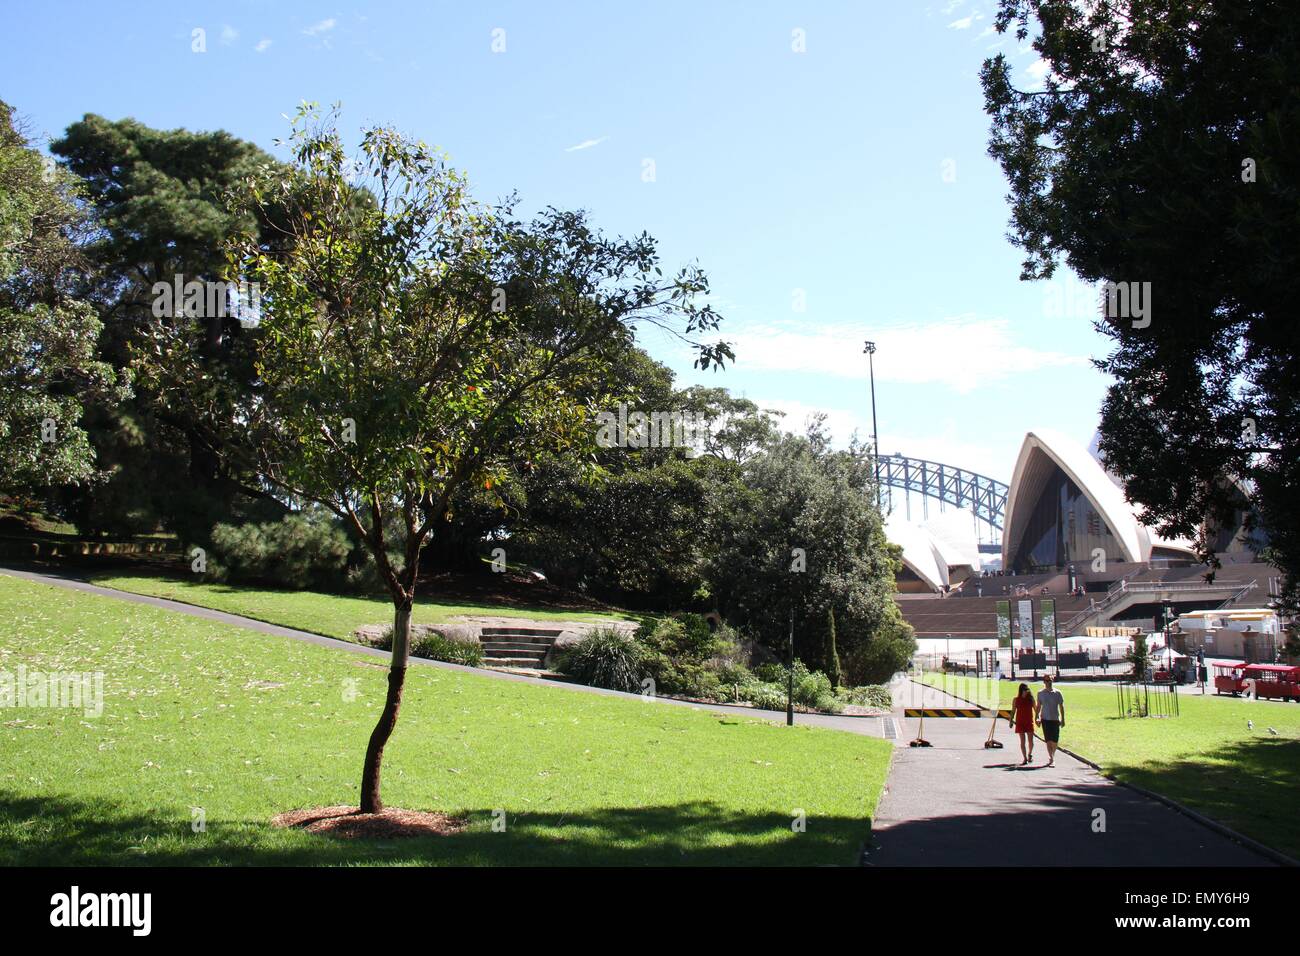 Sydney, Australia. 24 April 2015. The Royal Botanic Garden. Credit: Richard Milnes/Alamy Stock Photo